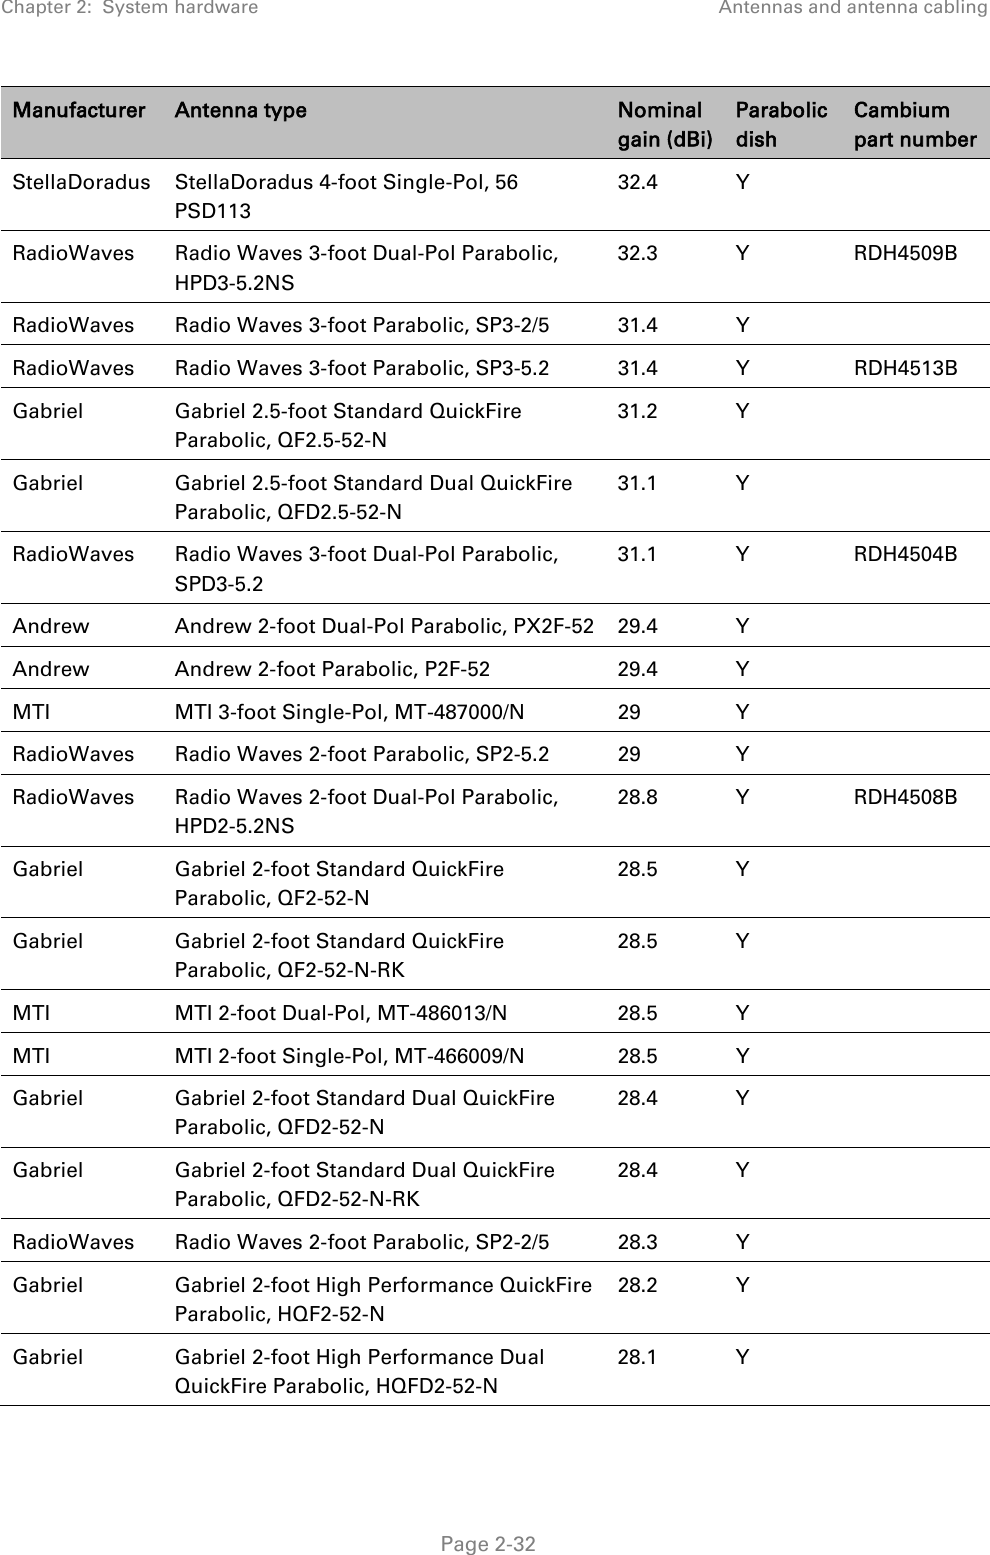 Chapter 2:  System hardware Antennas and antenna cabling  Manufacturer Antenna type Nominal gain (dBi) Parabolic dish Cambium part number StellaDoradus StellaDoradus 4-foot Single-Pol, 56 PSD113 32.4  Y   RadioWaves Radio Waves 3-foot Dual-Pol Parabolic, HPD3-5.2NS 32.3  Y  RDH4509B RadioWaves Radio Waves 3-foot Parabolic, SP3-2/5 31.4  Y   RadioWaves Radio Waves 3-foot Parabolic, SP3-5.2  31.4  Y  RDH4513B Gabriel Gabriel 2.5-foot Standard QuickFire Parabolic, QF2.5-52-N   31.2  Y   Gabriel Gabriel 2.5-foot Standard Dual QuickFire Parabolic, QFD2.5-52-N   31.1  Y   RadioWaves Radio Waves 3-foot Dual-Pol Parabolic, SPD3-5.2  31.1  Y  RDH4504B Andrew Andrew 2-foot Dual-Pol Parabolic, PX2F-52 29.4  Y   Andrew Andrew 2-foot Parabolic, P2F-52 29.4  Y   MTI MTI 3-foot Single-Pol, MT-487000/N 29  Y   RadioWaves Radio Waves 2-foot Parabolic, SP2-5.2 29  Y   RadioWaves Radio Waves 2-foot Dual-Pol Parabolic, HPD2-5.2NS 28.8  Y  RDH4508B Gabriel Gabriel 2-foot Standard QuickFire Parabolic, QF2-52-N   28.5  Y   Gabriel Gabriel 2-foot Standard QuickFire Parabolic, QF2-52-N-RK   28.5  Y   MTI MTI 2-foot Dual-Pol, MT-486013/N   28.5  Y   MTI MTI 2-foot Single-Pol, MT-466009/N  28.5  Y   Gabriel Gabriel 2-foot Standard Dual QuickFire Parabolic, QFD2-52-N   28.4  Y   Gabriel Gabriel 2-foot Standard Dual QuickFire Parabolic, QFD2-52-N-RK   28.4  Y   RadioWaves Radio Waves 2-foot Parabolic, SP2-2/5 28.3  Y   Gabriel Gabriel 2-foot High Performance QuickFire Parabolic, HQF2-52-N   28.2  Y   Gabriel Gabriel 2-foot High Performance Dual QuickFire Parabolic, HQFD2-52-N   28.1  Y    Page 2-32 